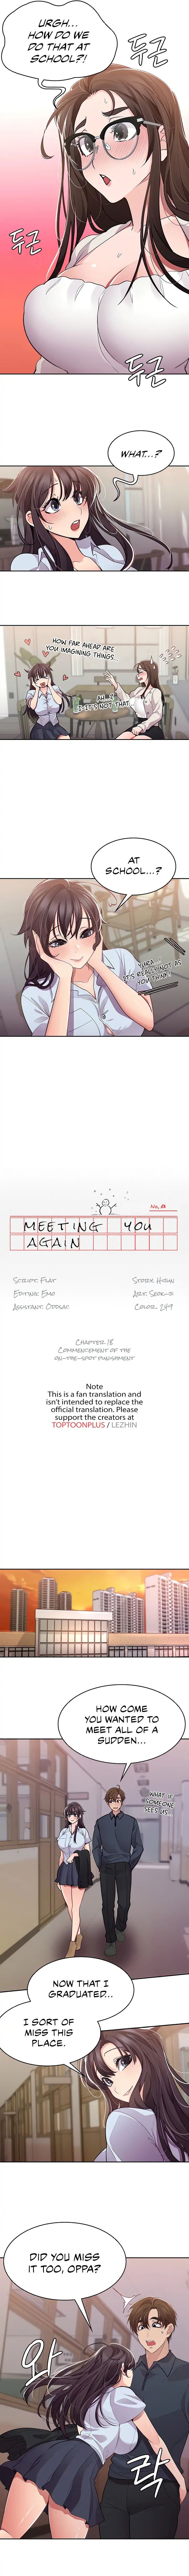 meeting-you-again-chap-18-2